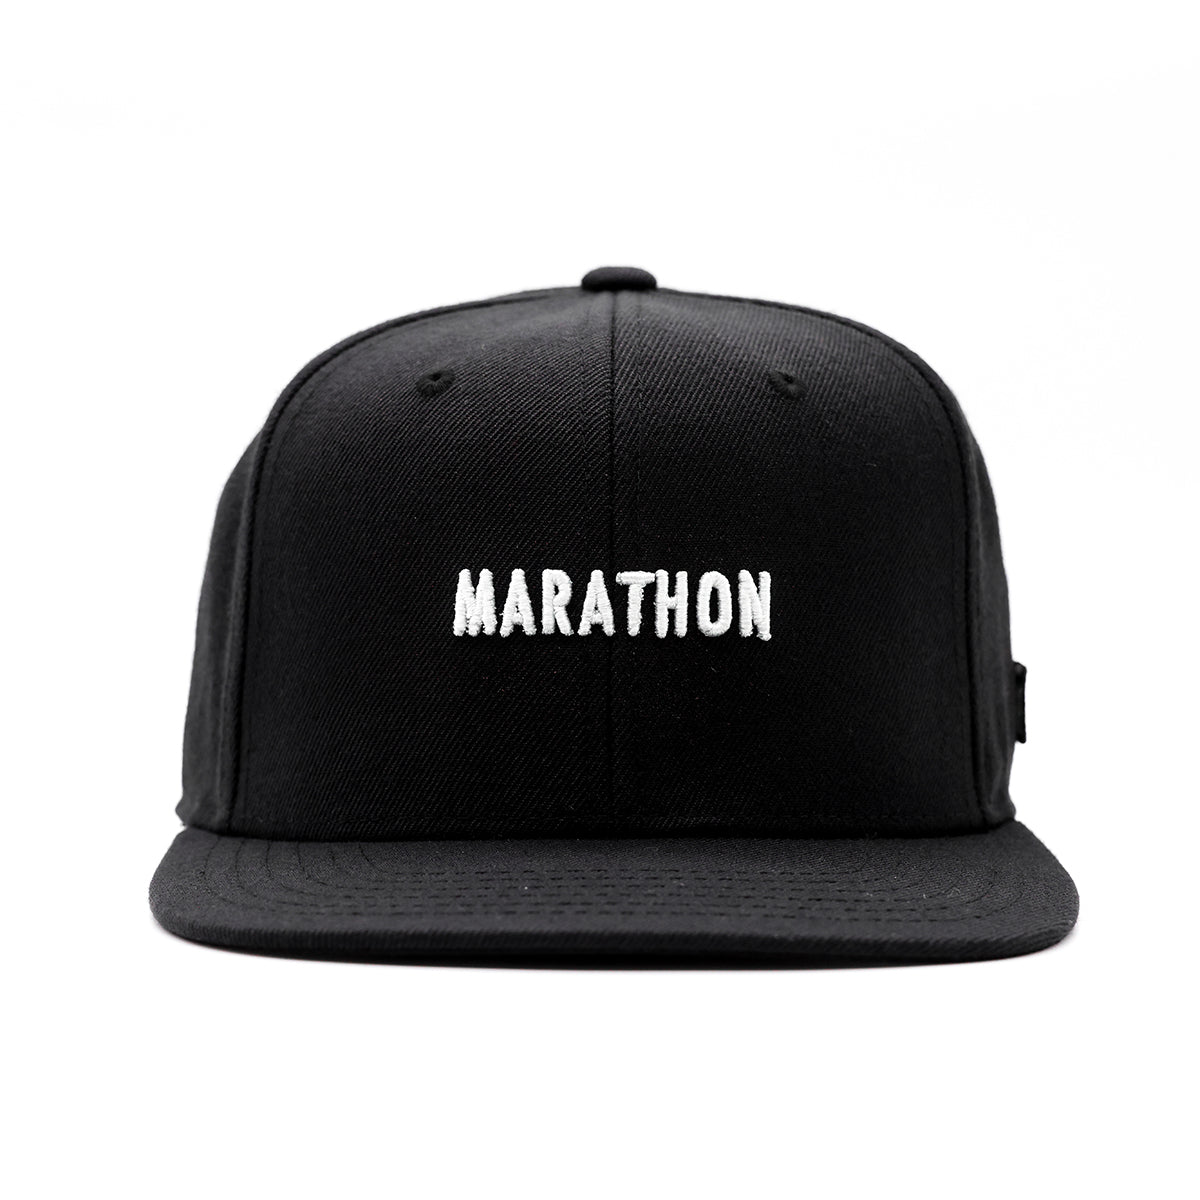 Marathon Limited Edition Snapback - Black/White - Front